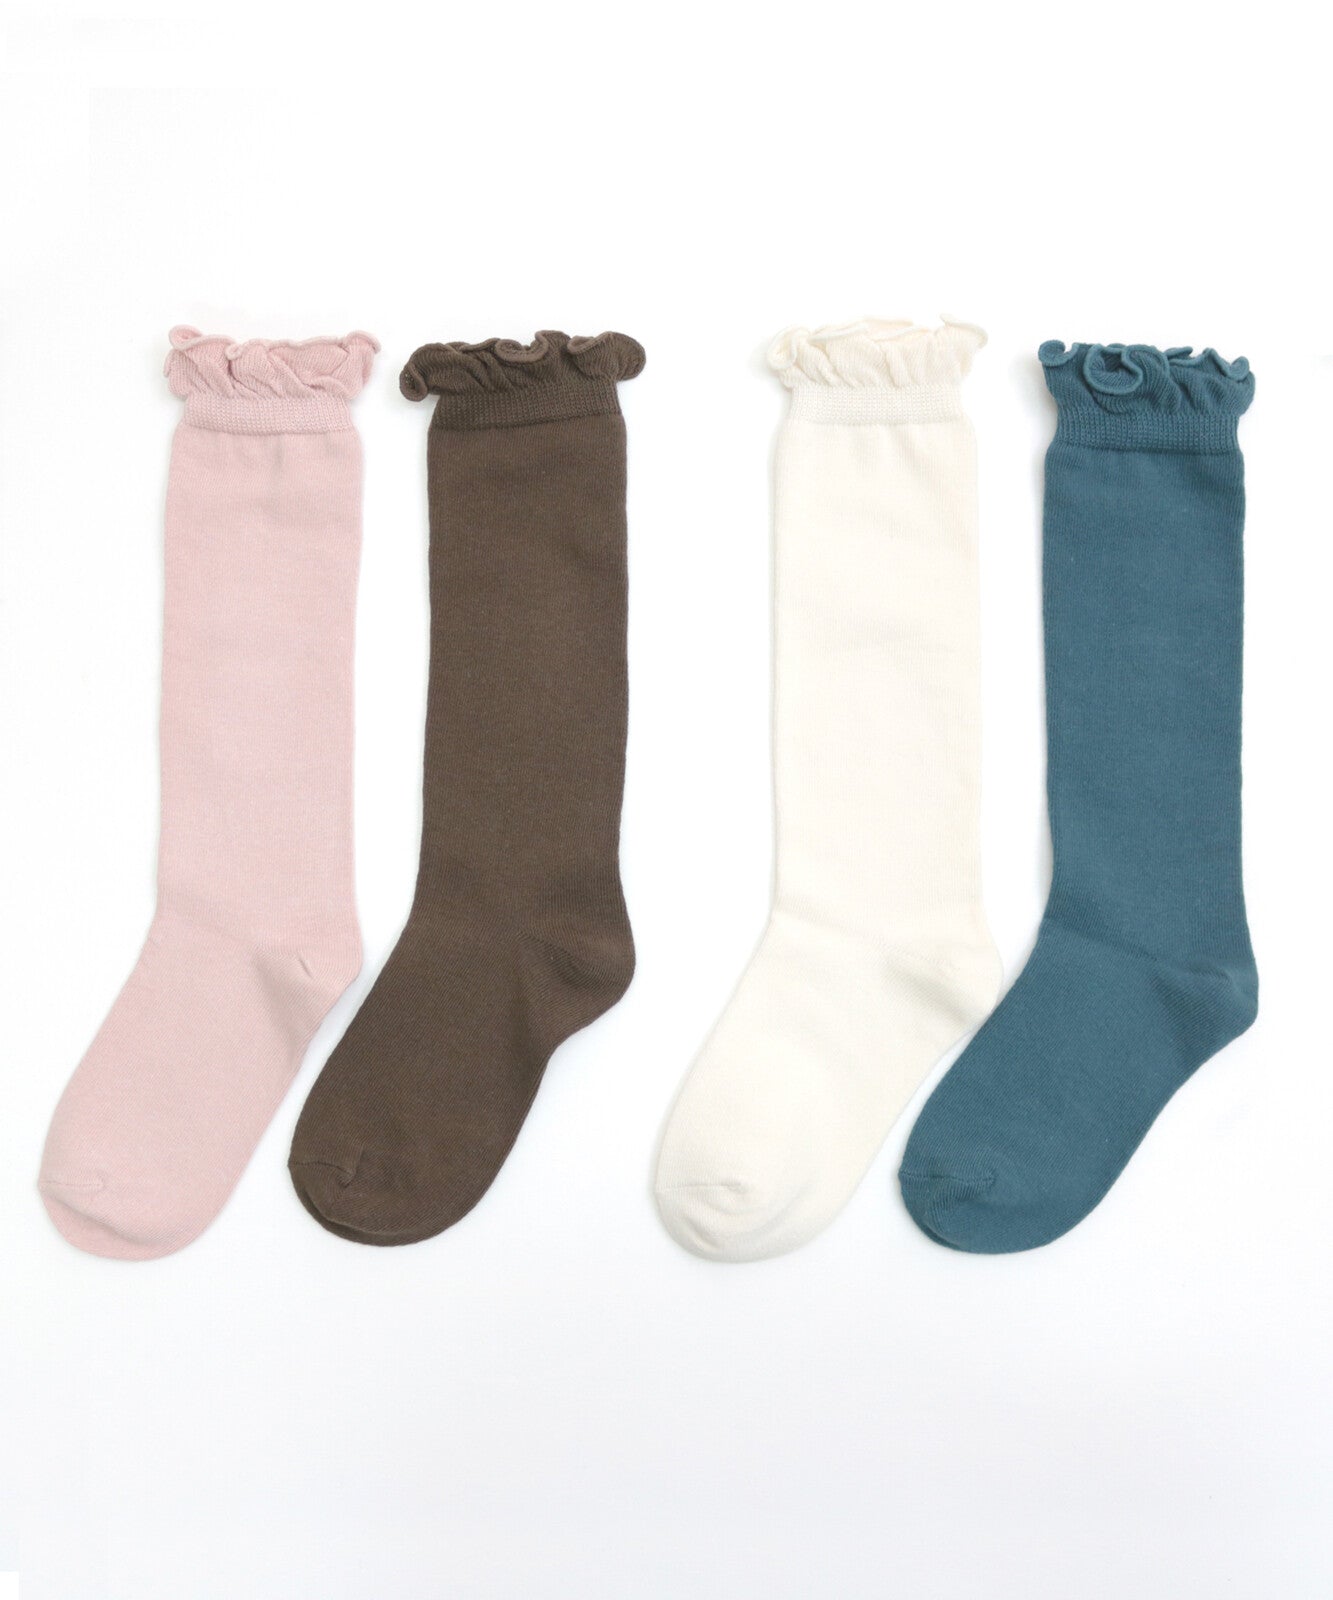 Stample Frill High Socks White&Navy 2Pairs/Stample荷叶边儿童及膝长袜 白色&墨蓝色 2双装 13-18cm 1-6yrs